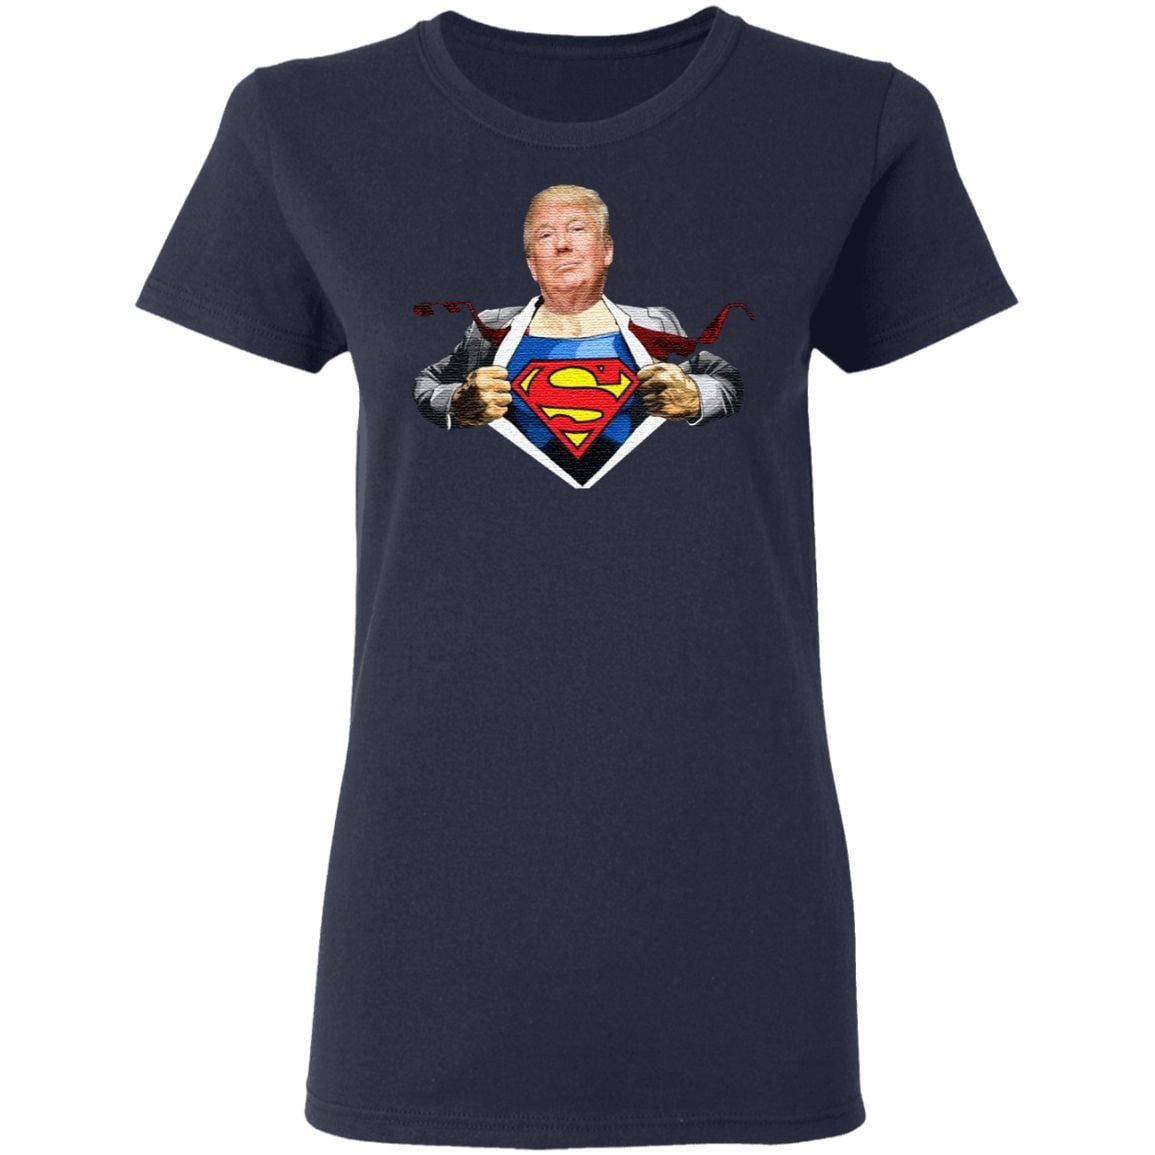 Trump superman t shirt